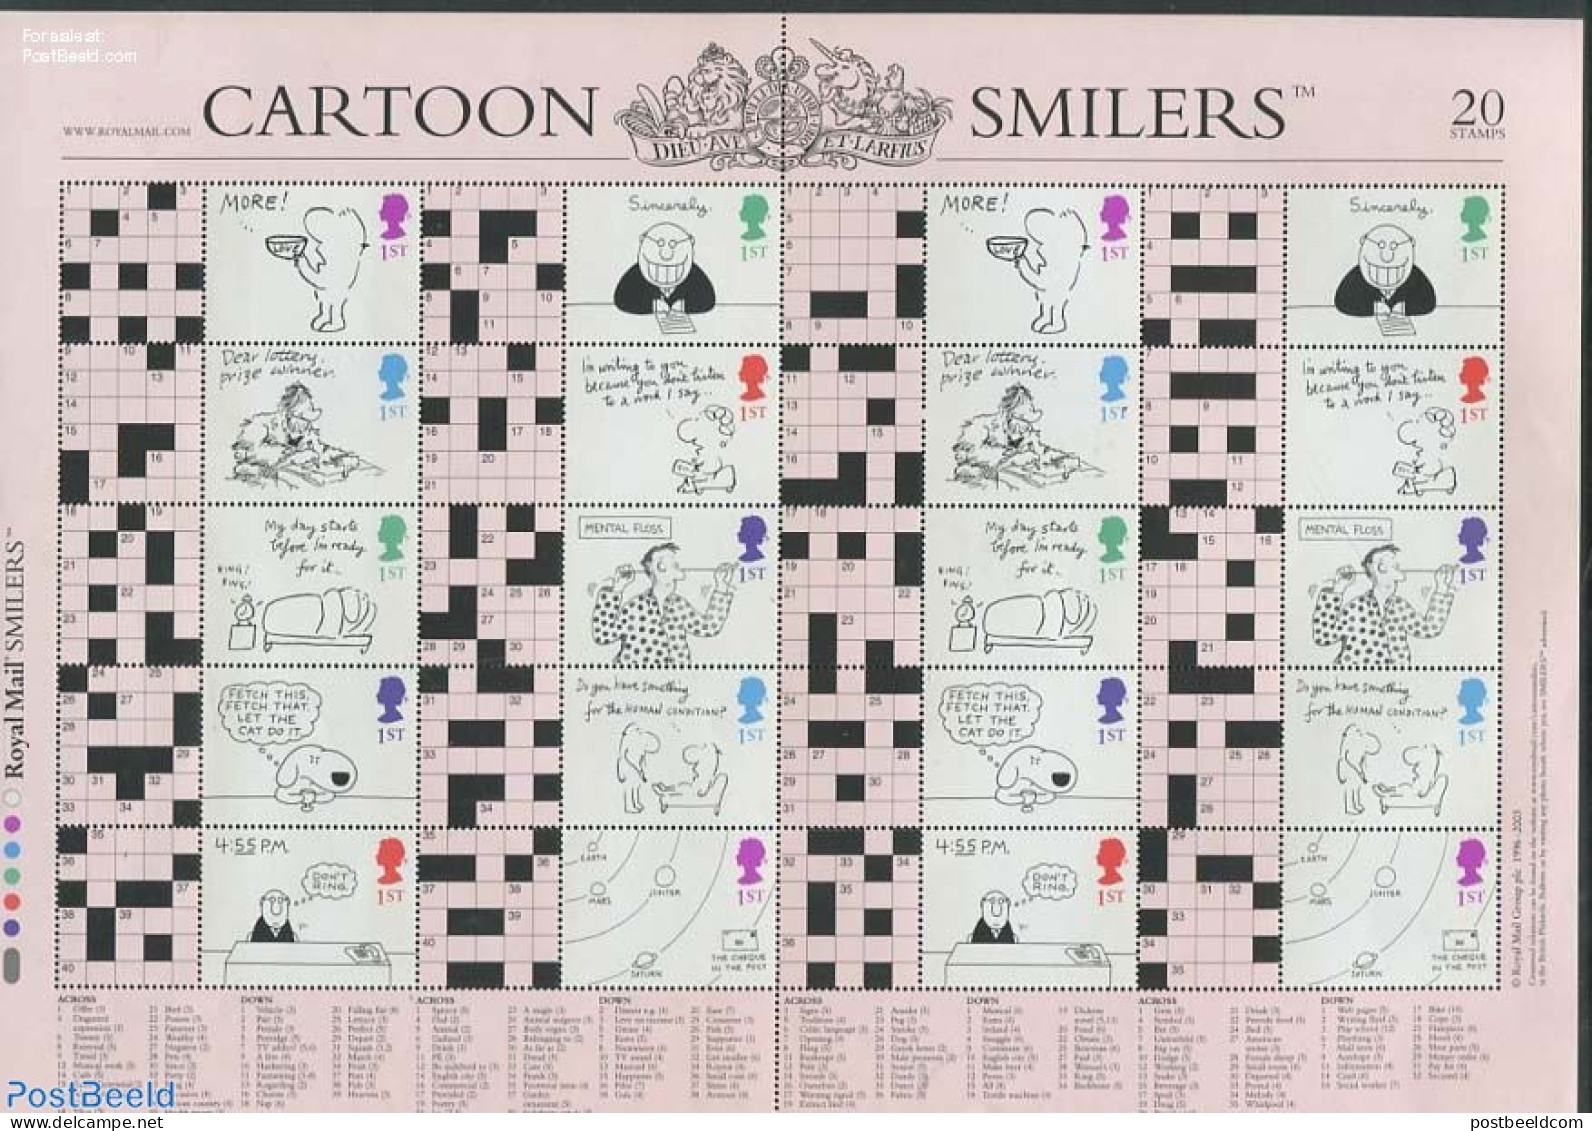 Great Britain 2003 Label Sheet, Crossword Cartoons, Mint NH, Art - Comics (except Disney) - Unused Stamps